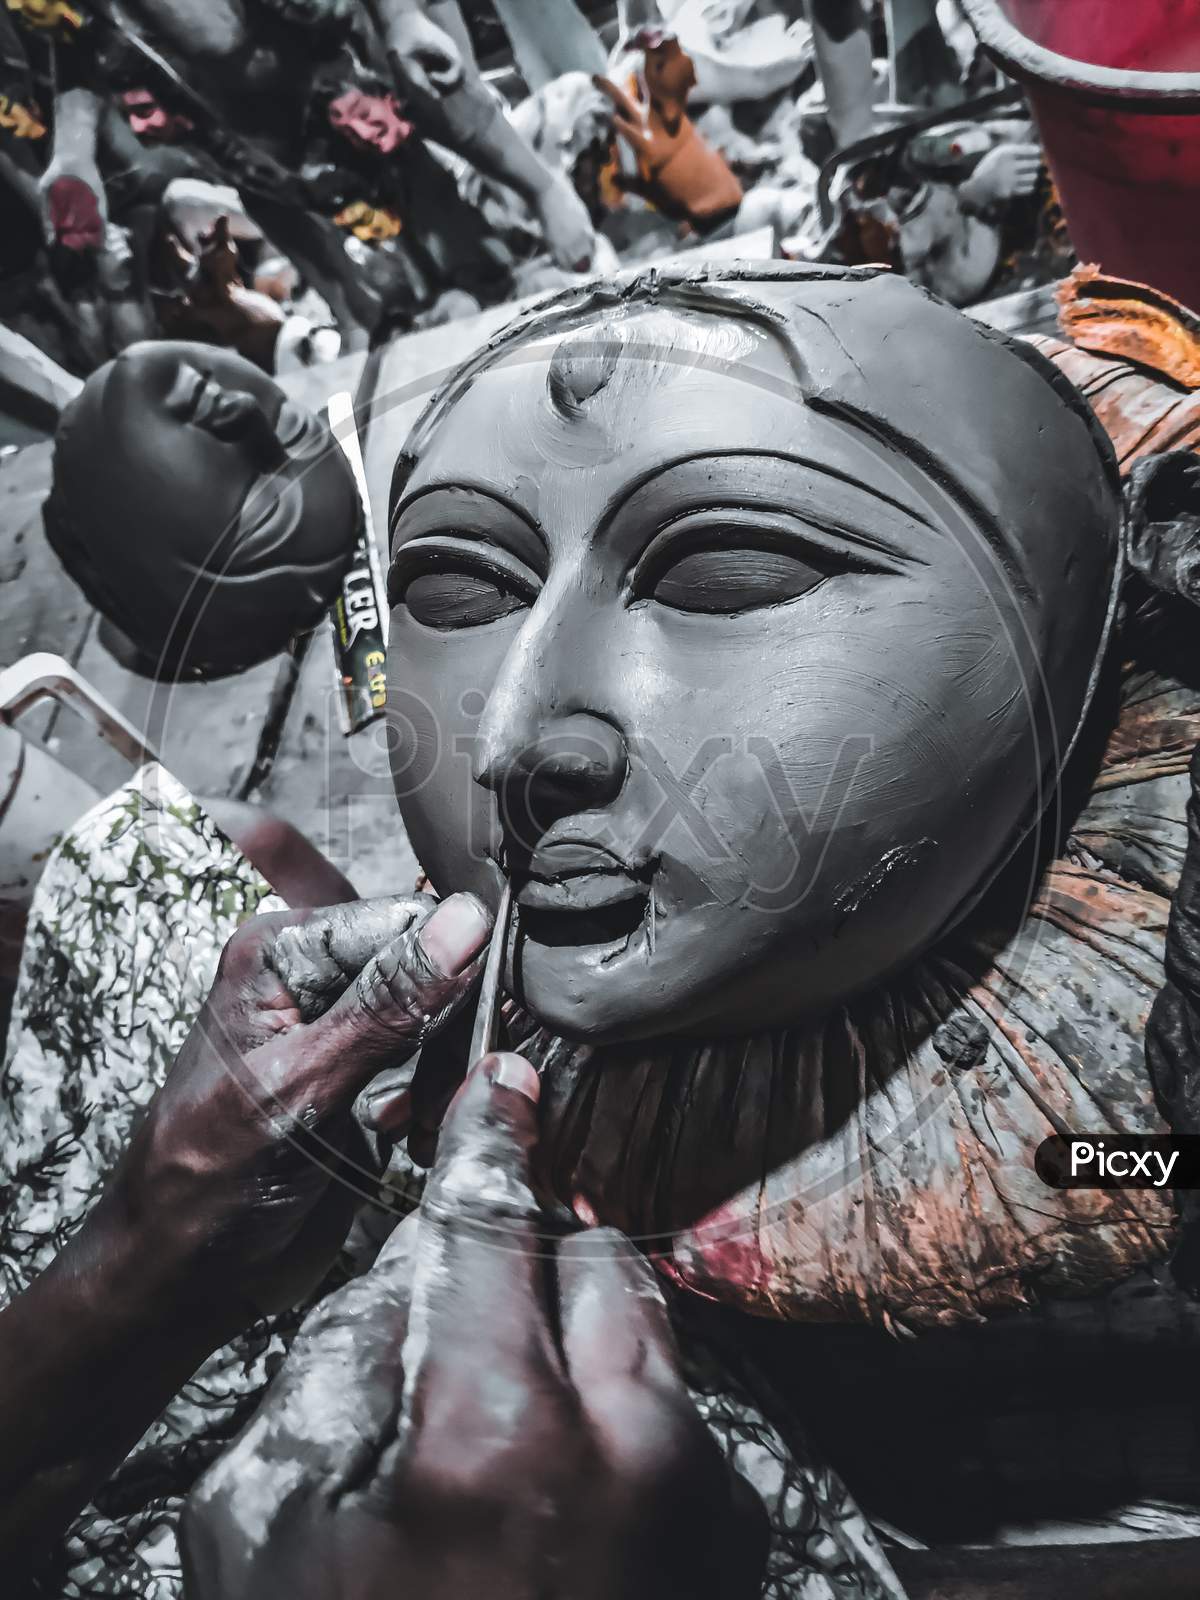 Craftsman is working on the face of Goddess Durga's Idol during pandemic , Kolkata, India, October 12, 2020